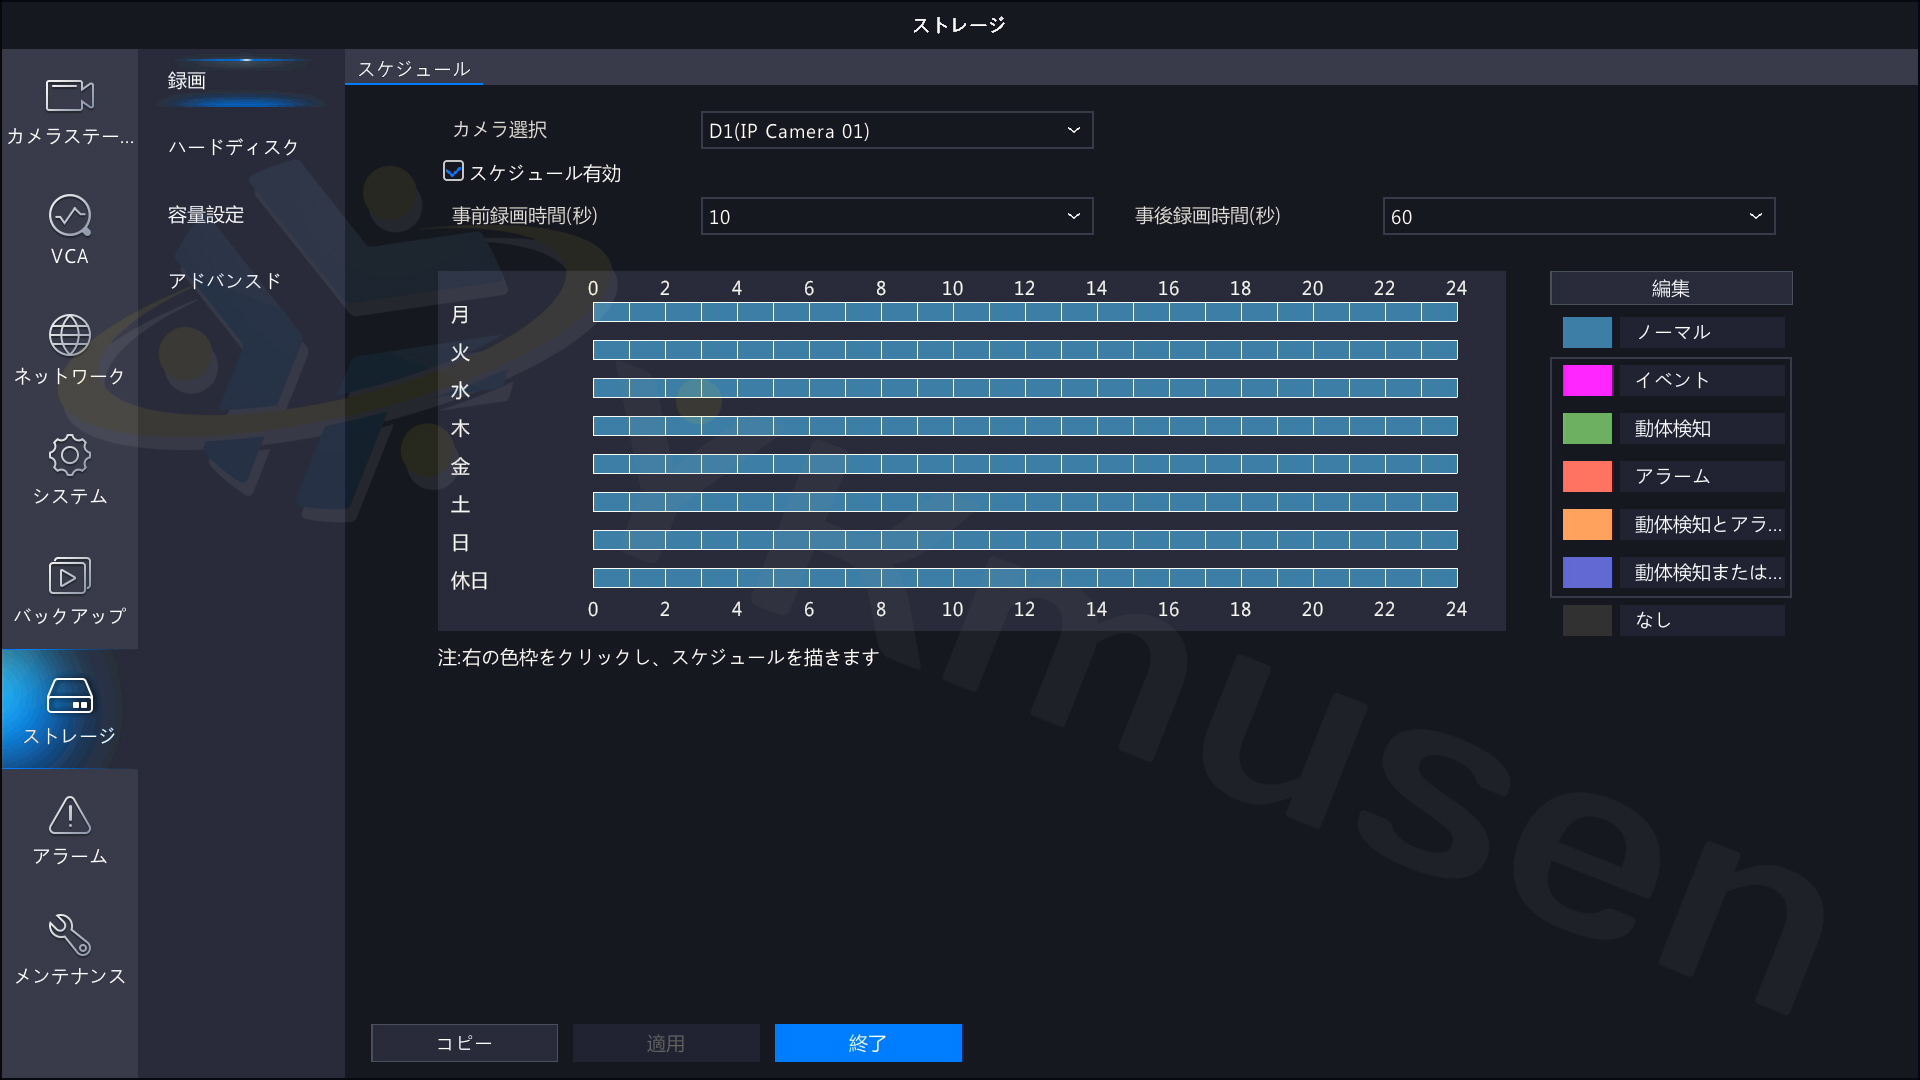 NVR516-64 スケジュール録画設定画面